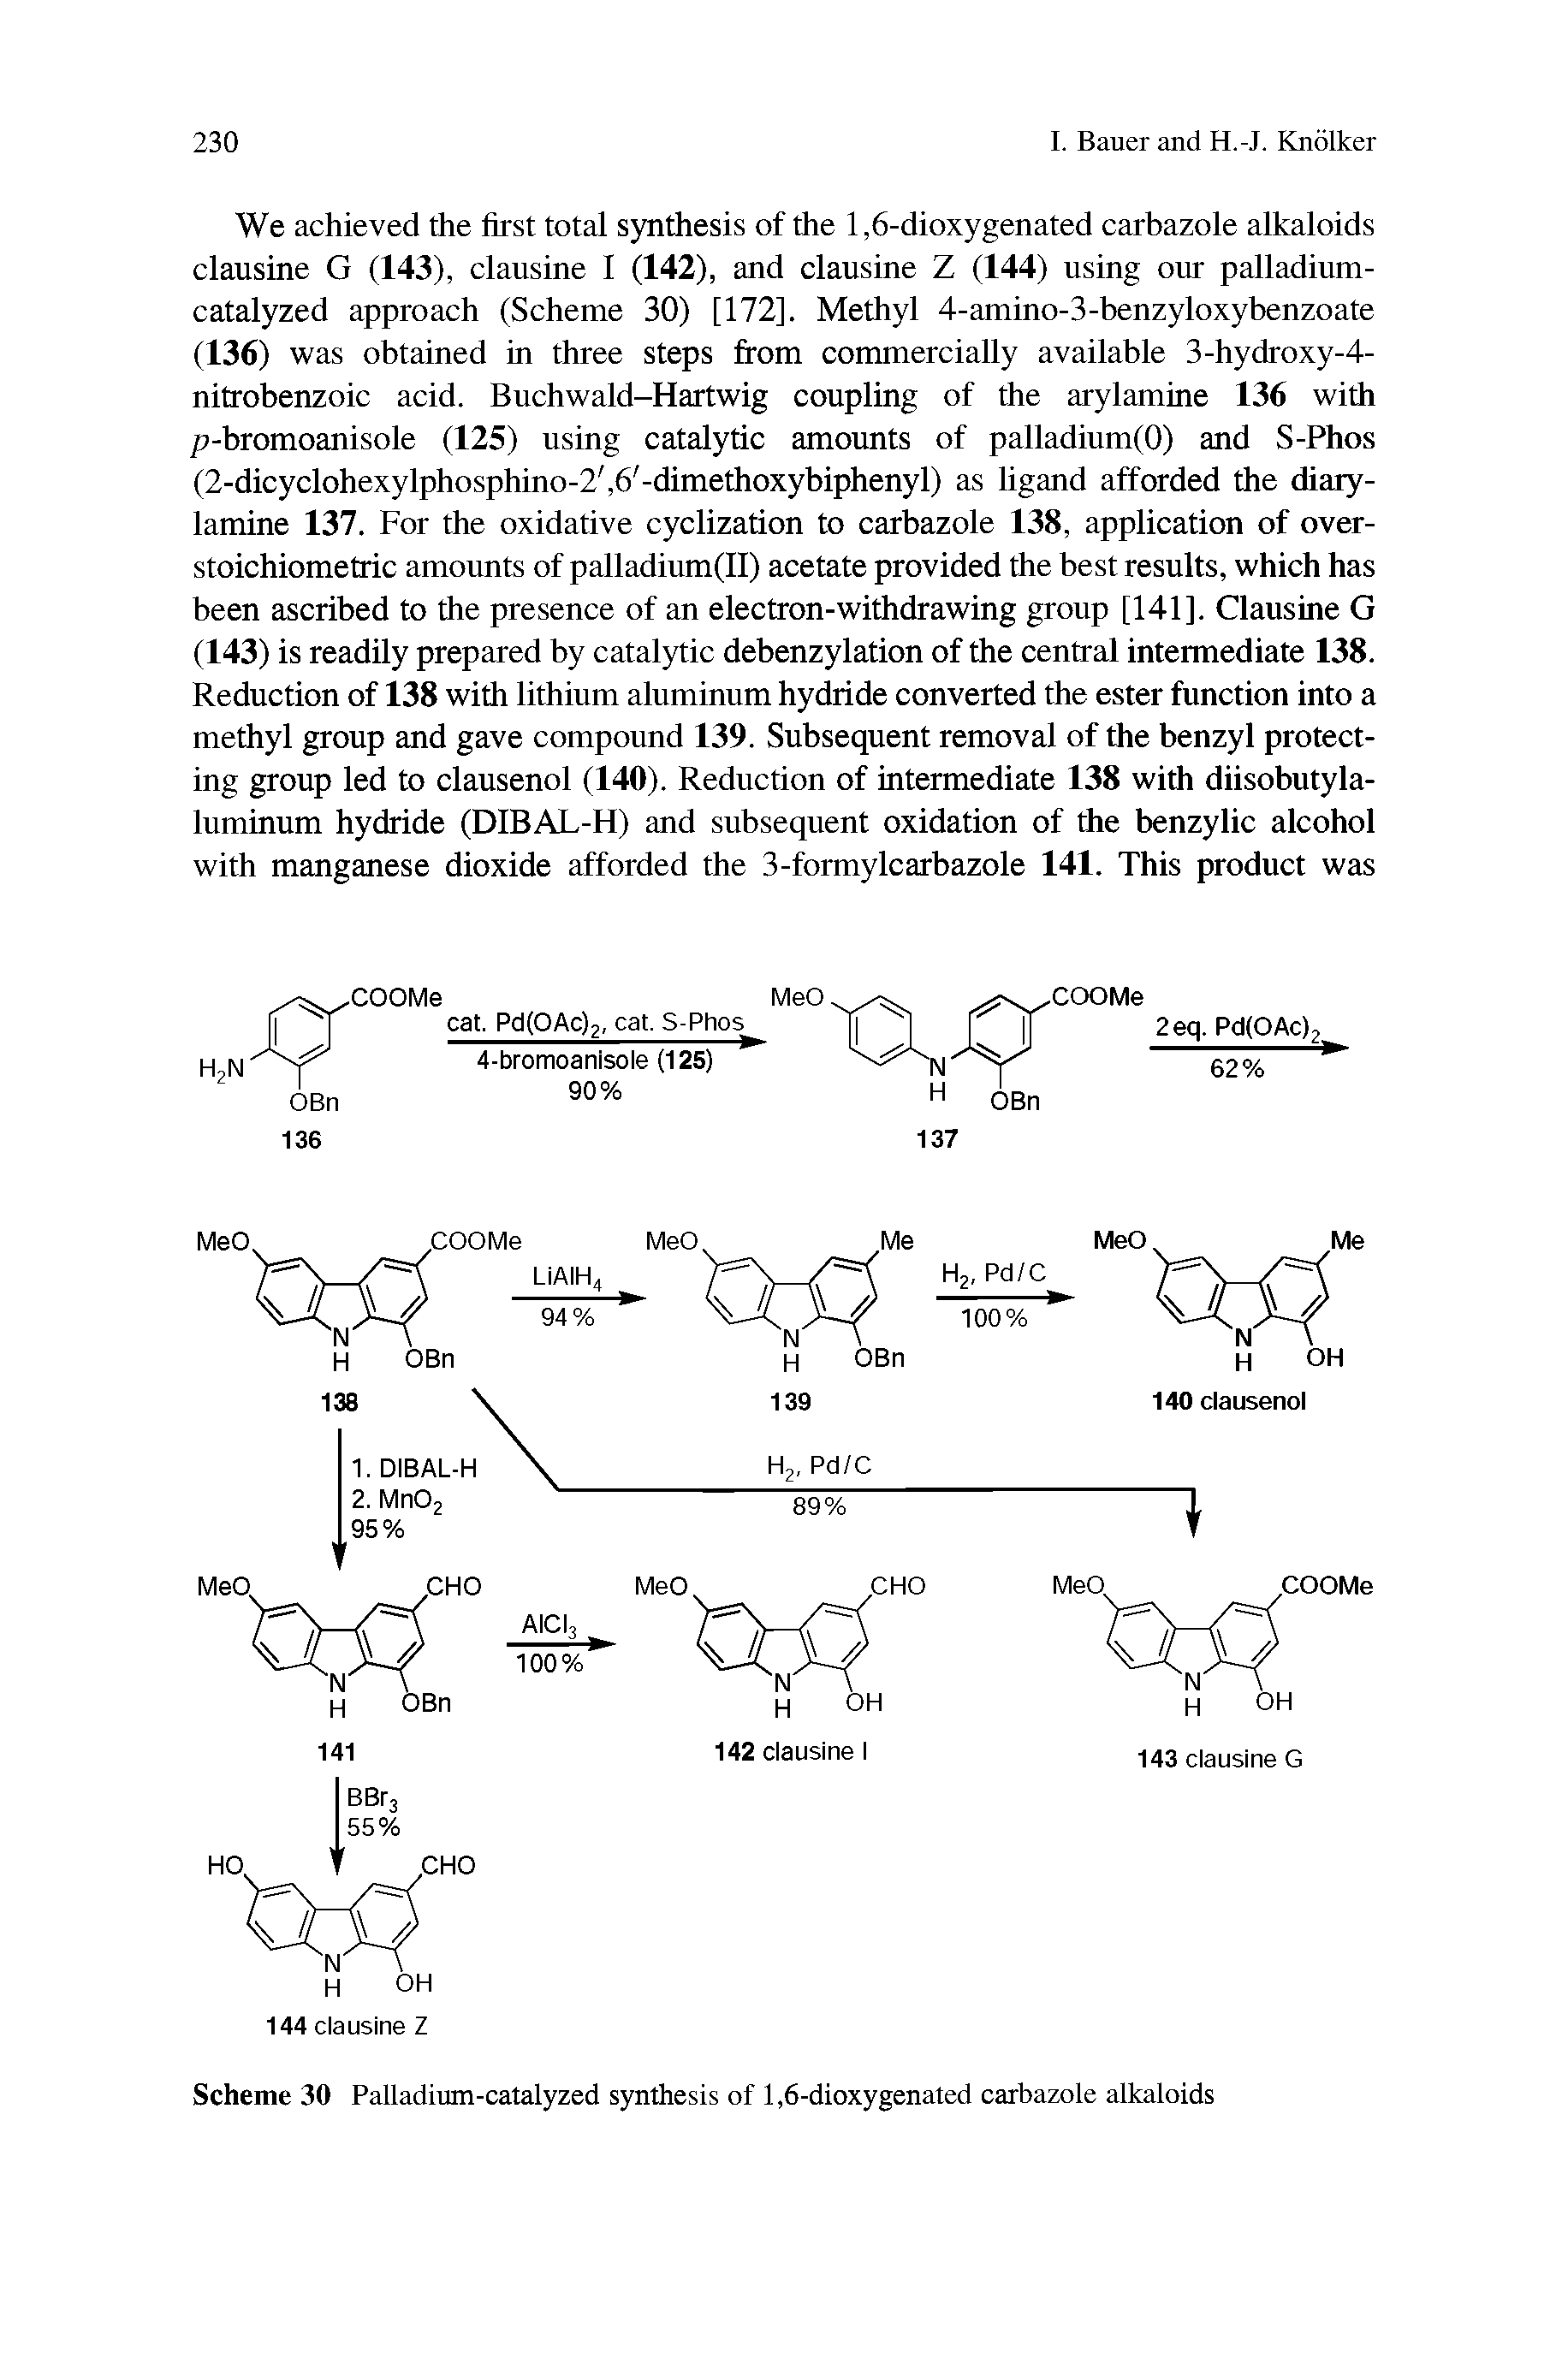 Scheme 30 Palladium-catalyzed synthesis of 1,6-dioxygenated carbazole alkaloids...